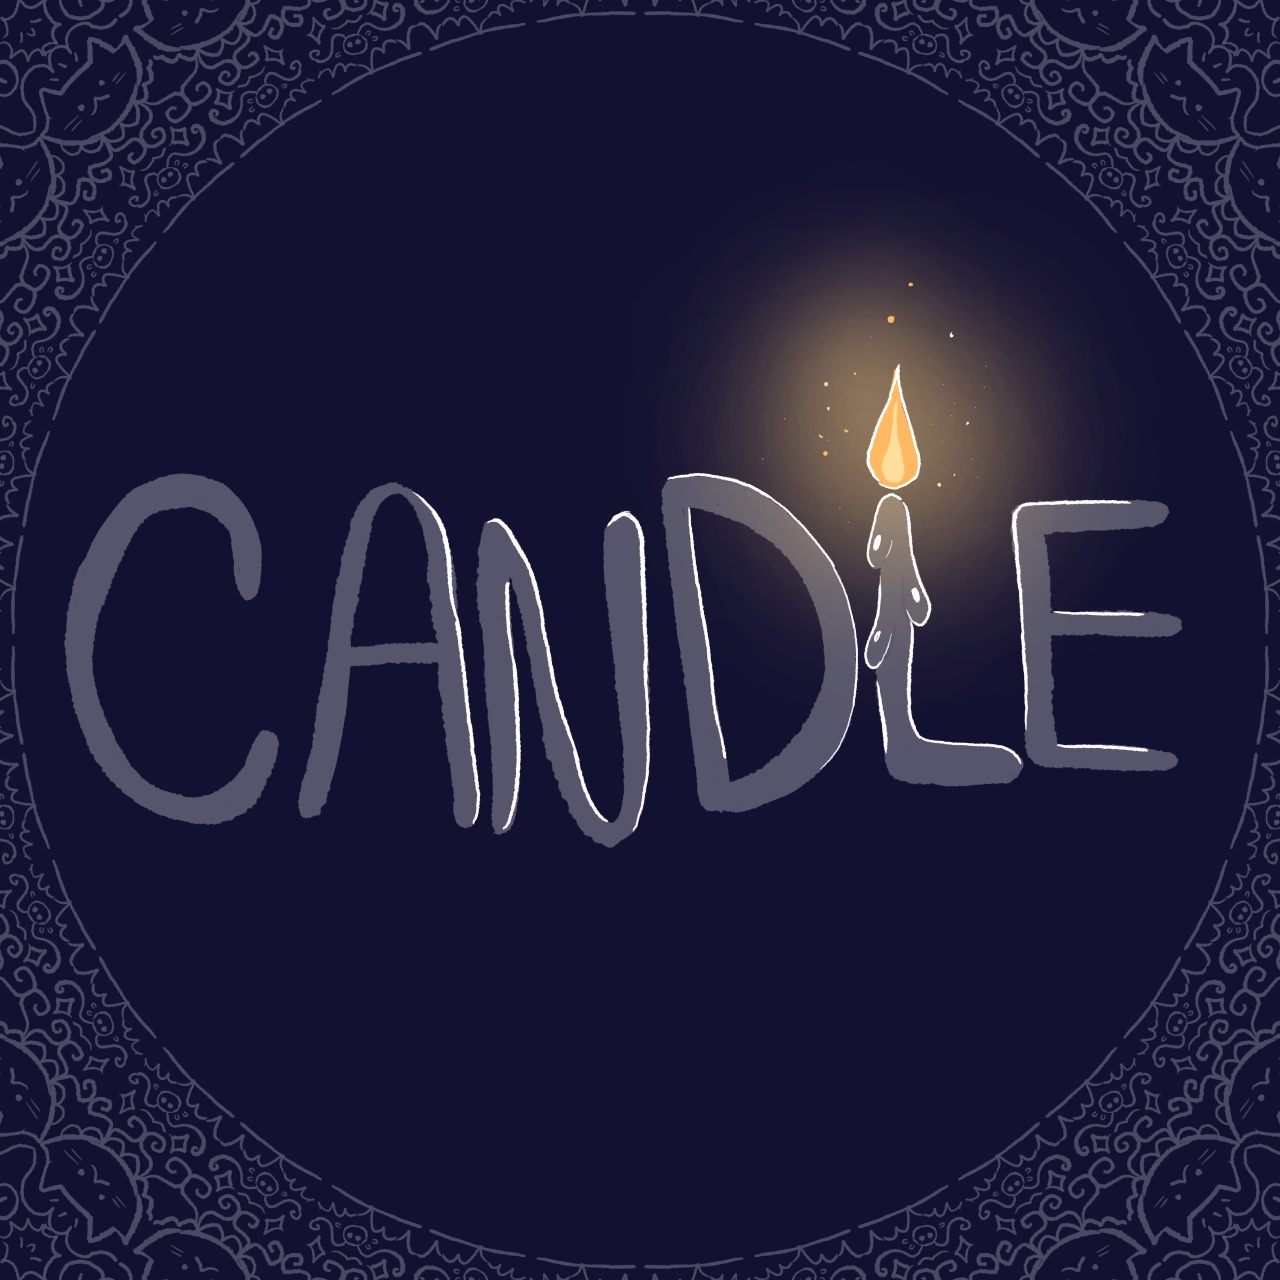 Candle | WEBTOON